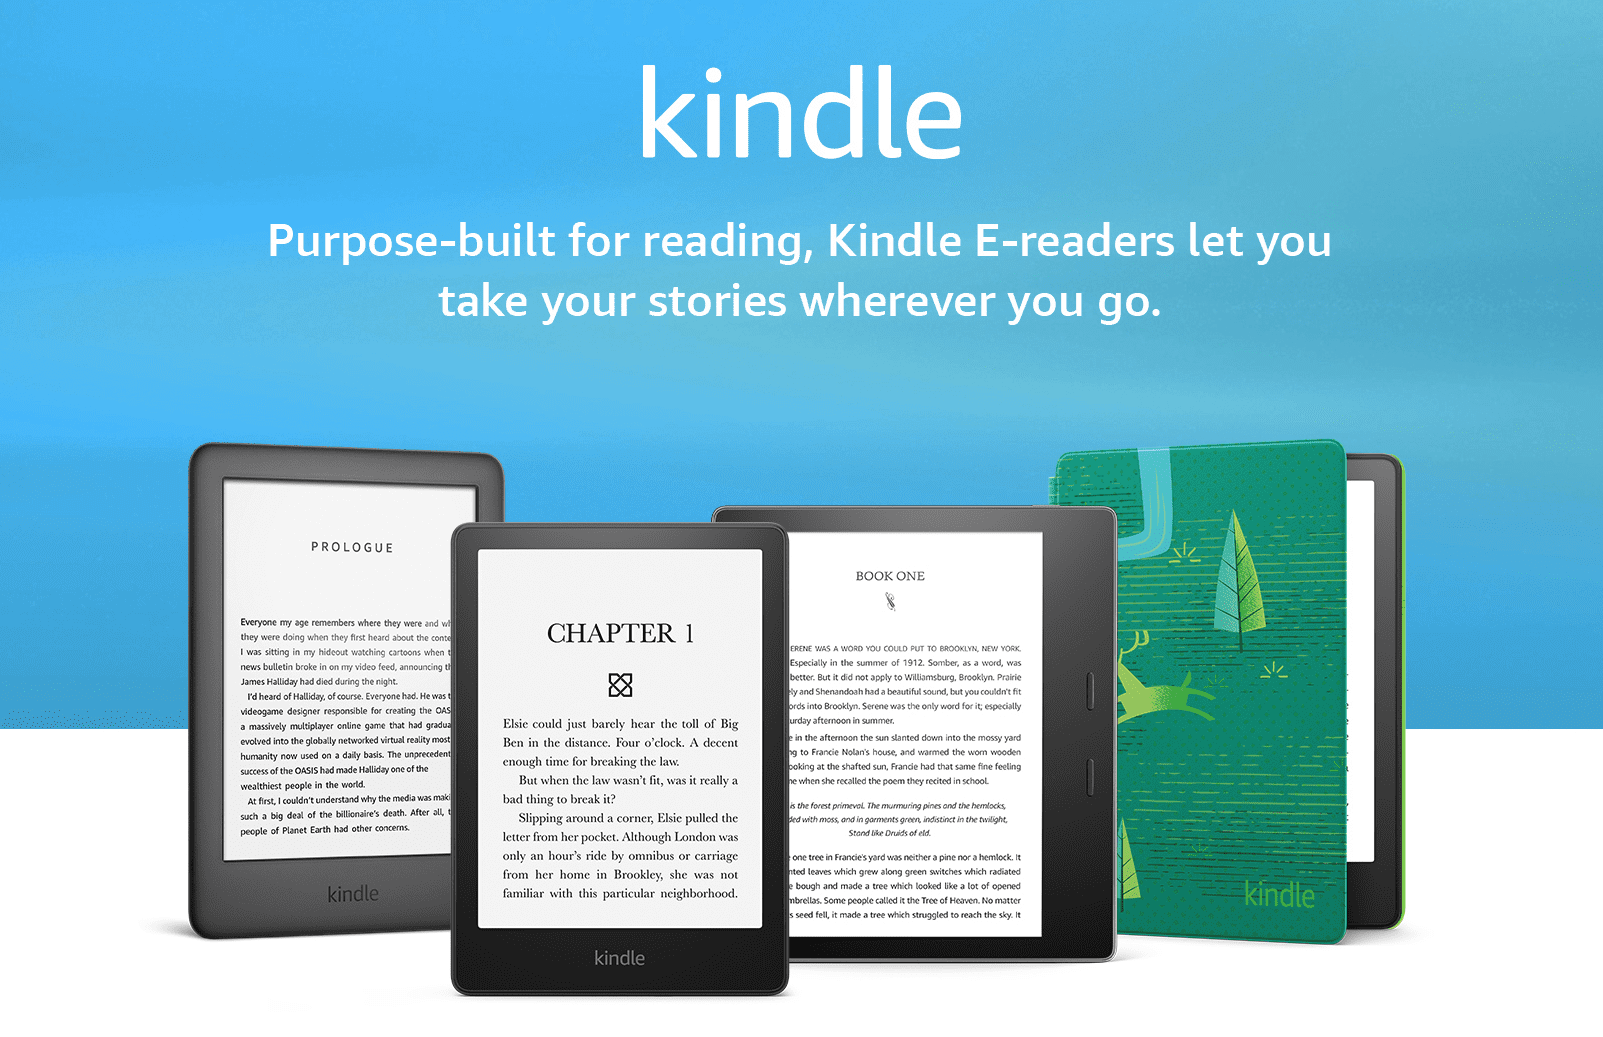 Amazon Kindle To Finally Gain ePub Support